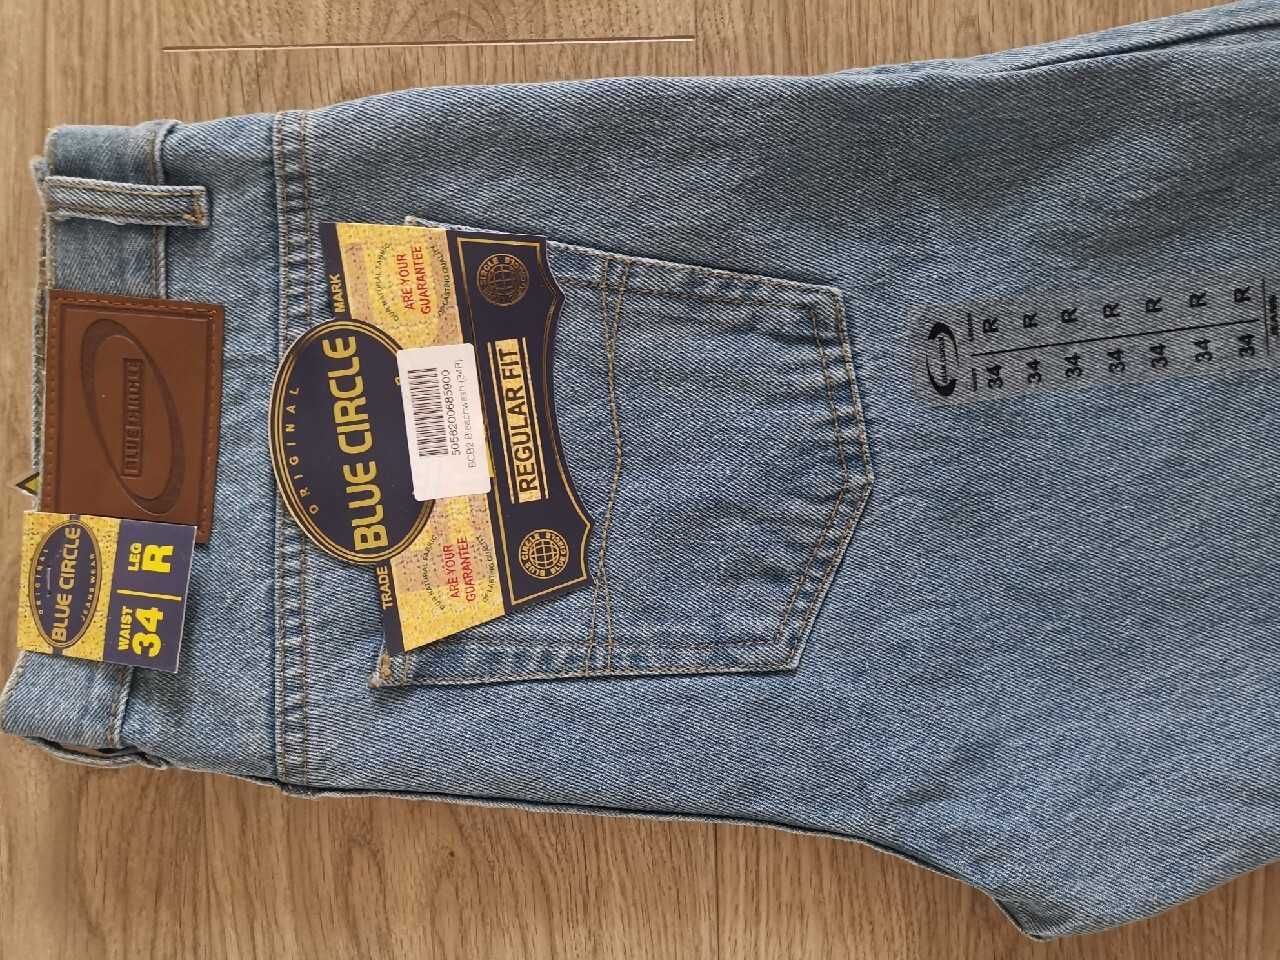 Spodnie jeans dżins niebieskie męskie Blue Circle regular fit 34/34